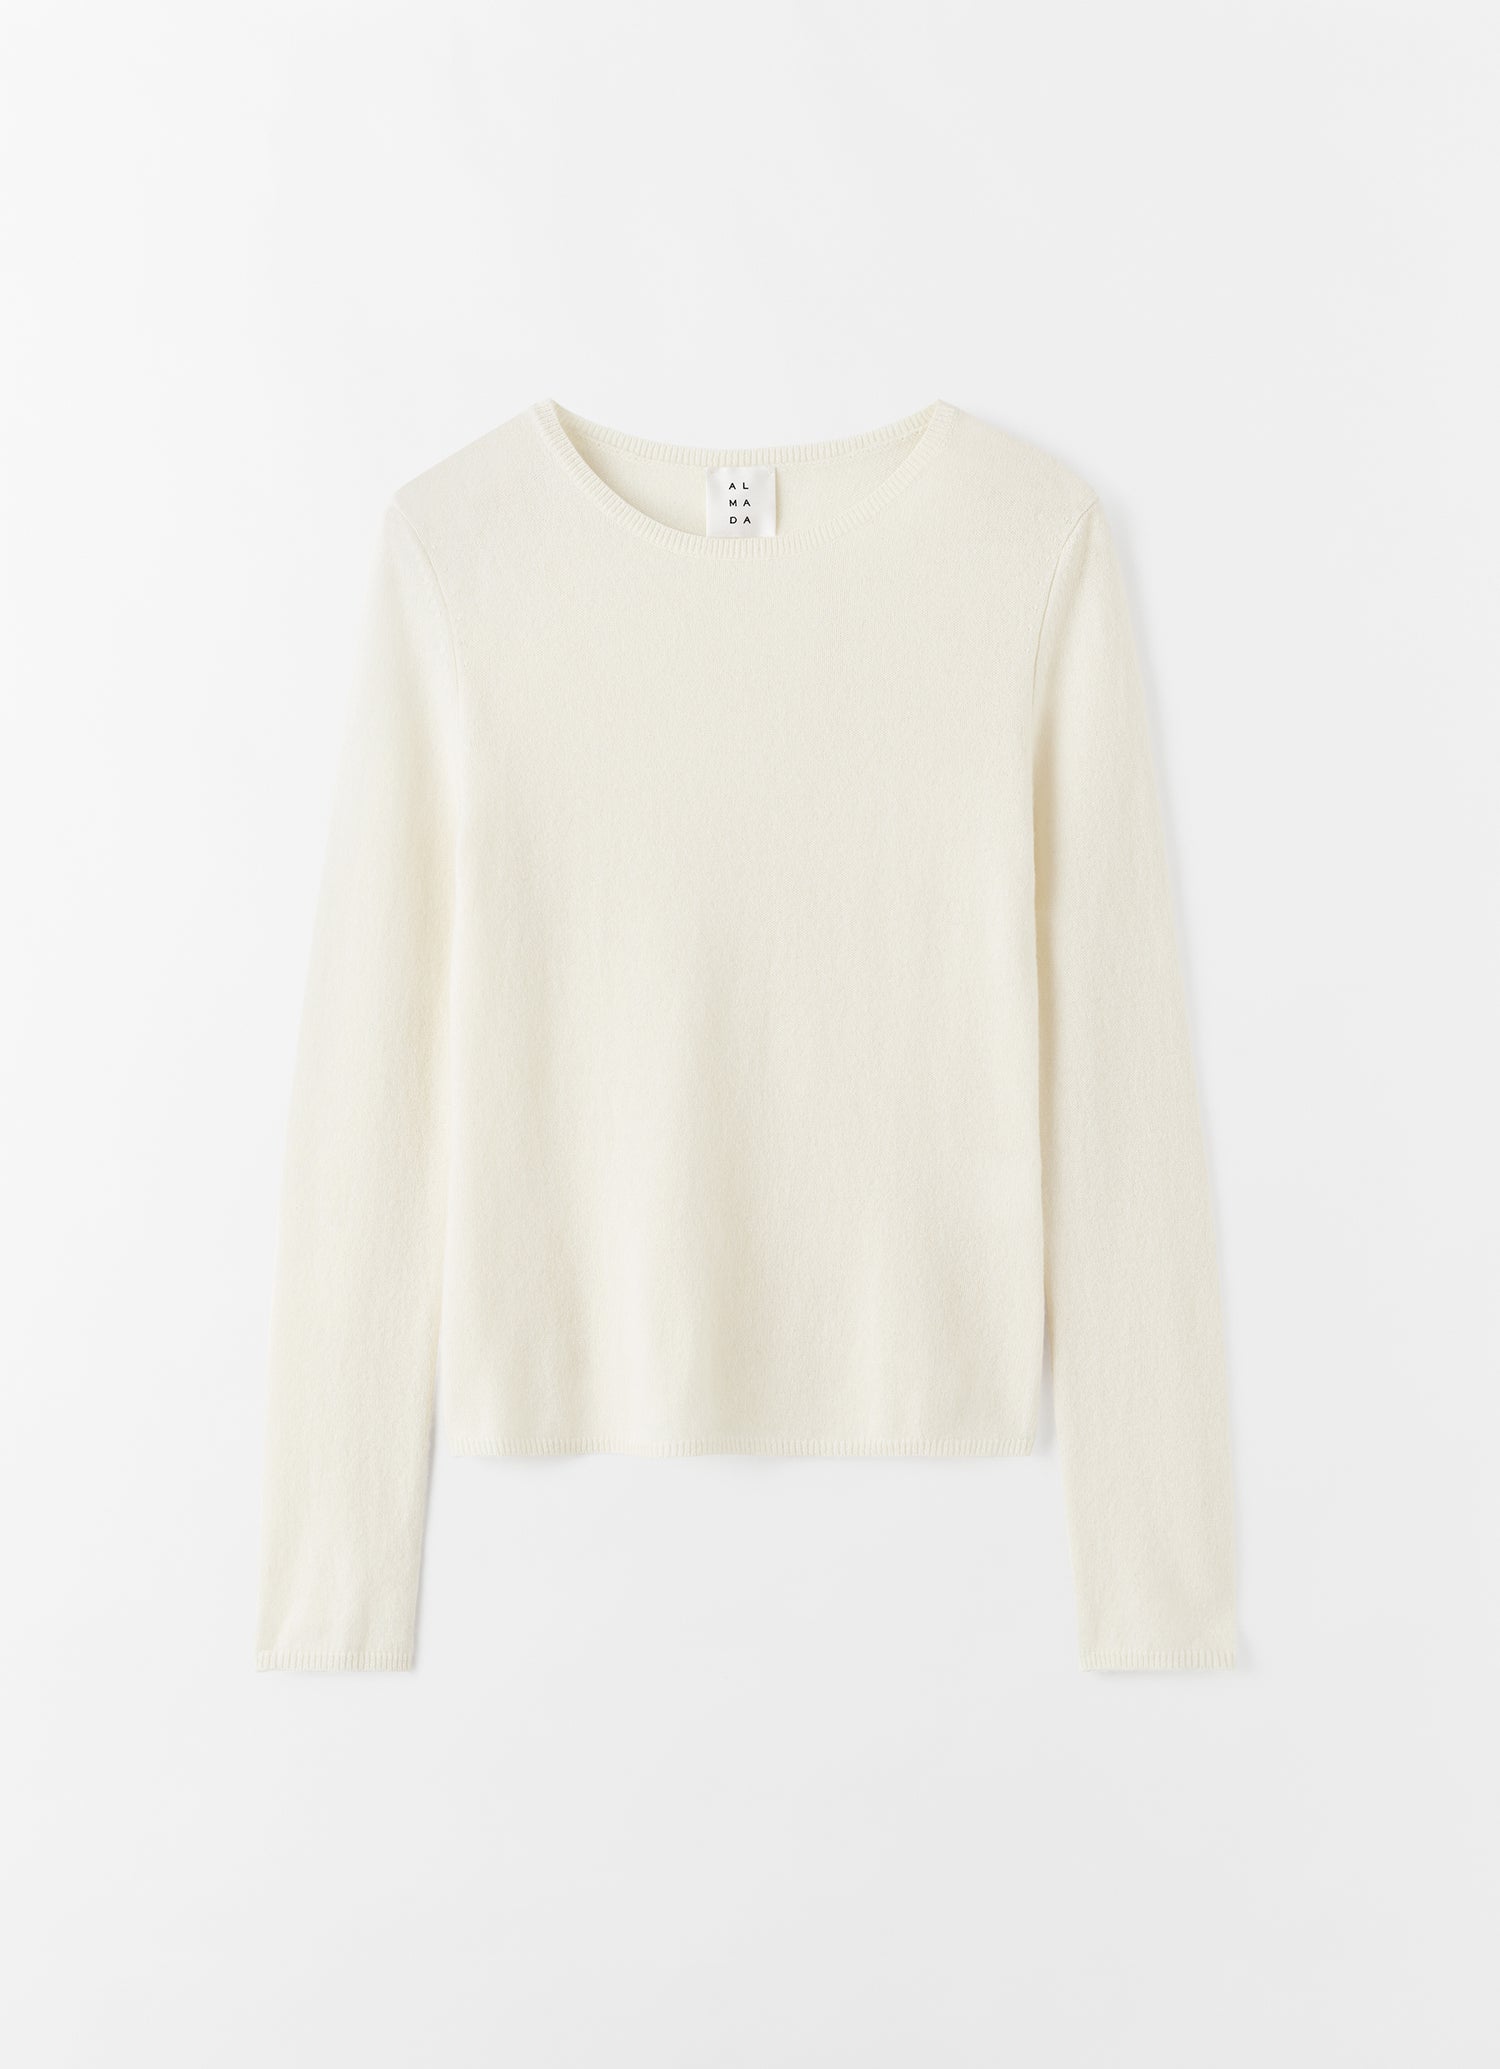 Awa Crewneck Sweater, cream